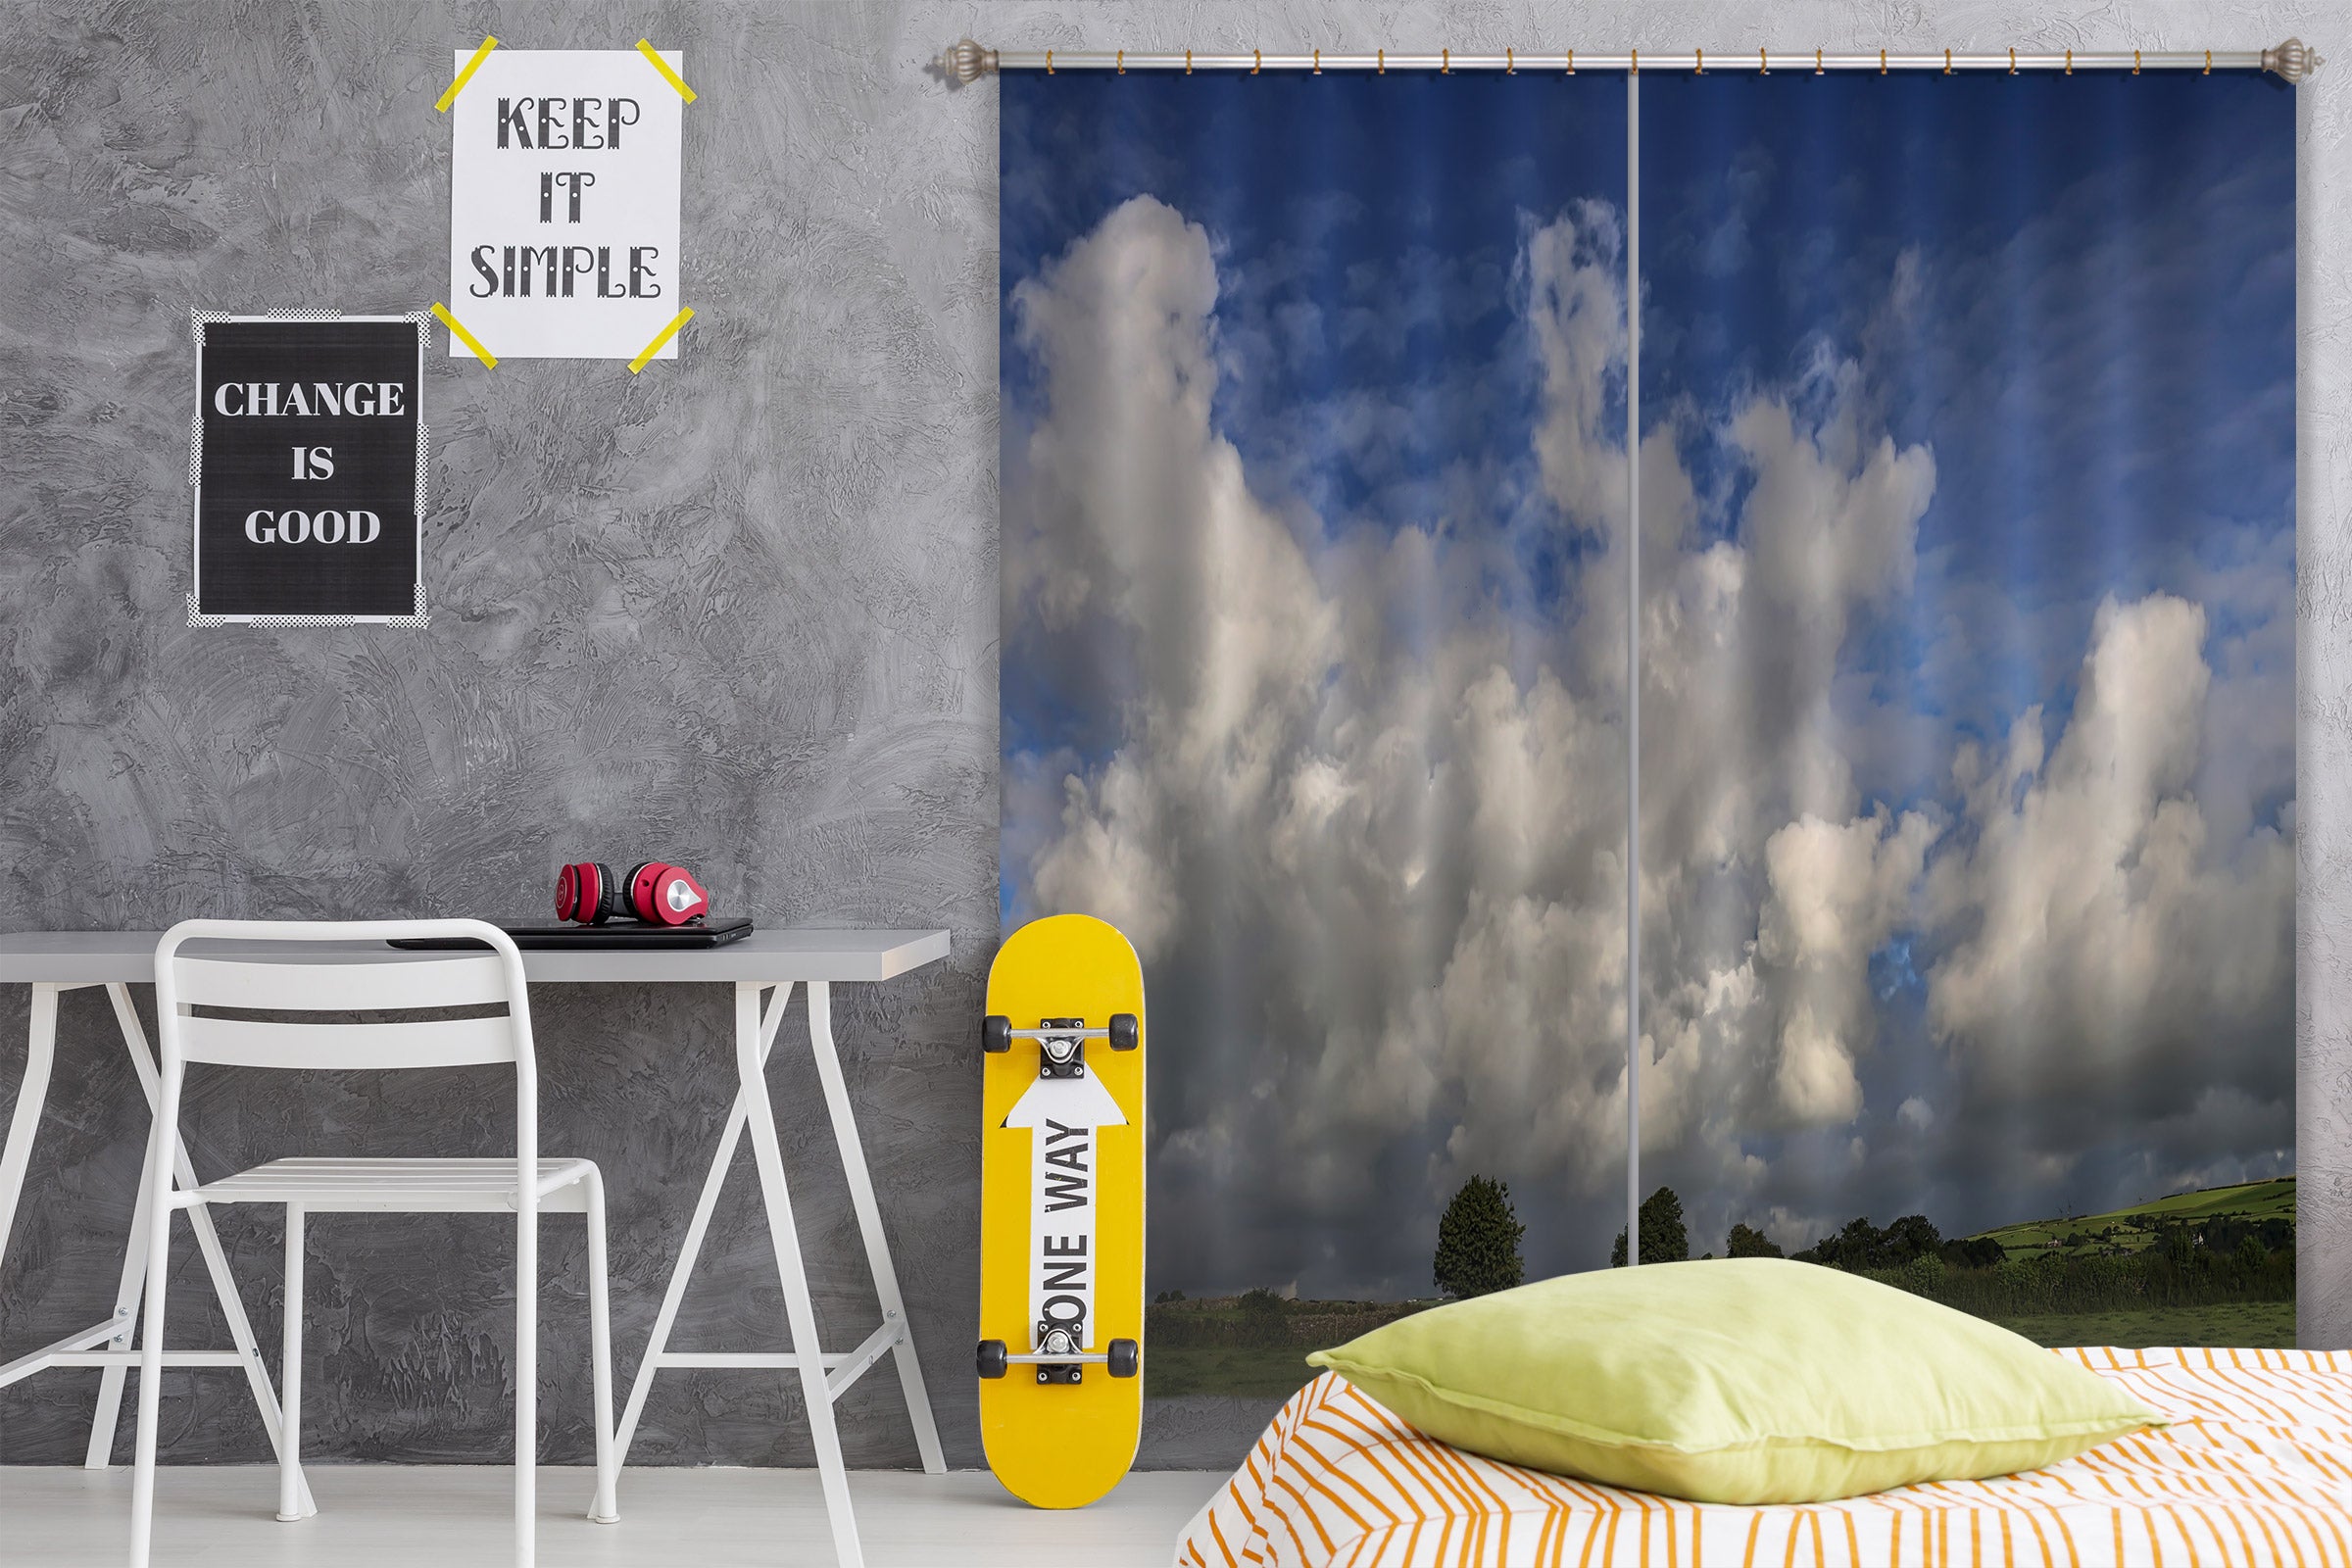 3D Tree Clouds 007 Jerry LoFaro Curtain Curtains Drapes